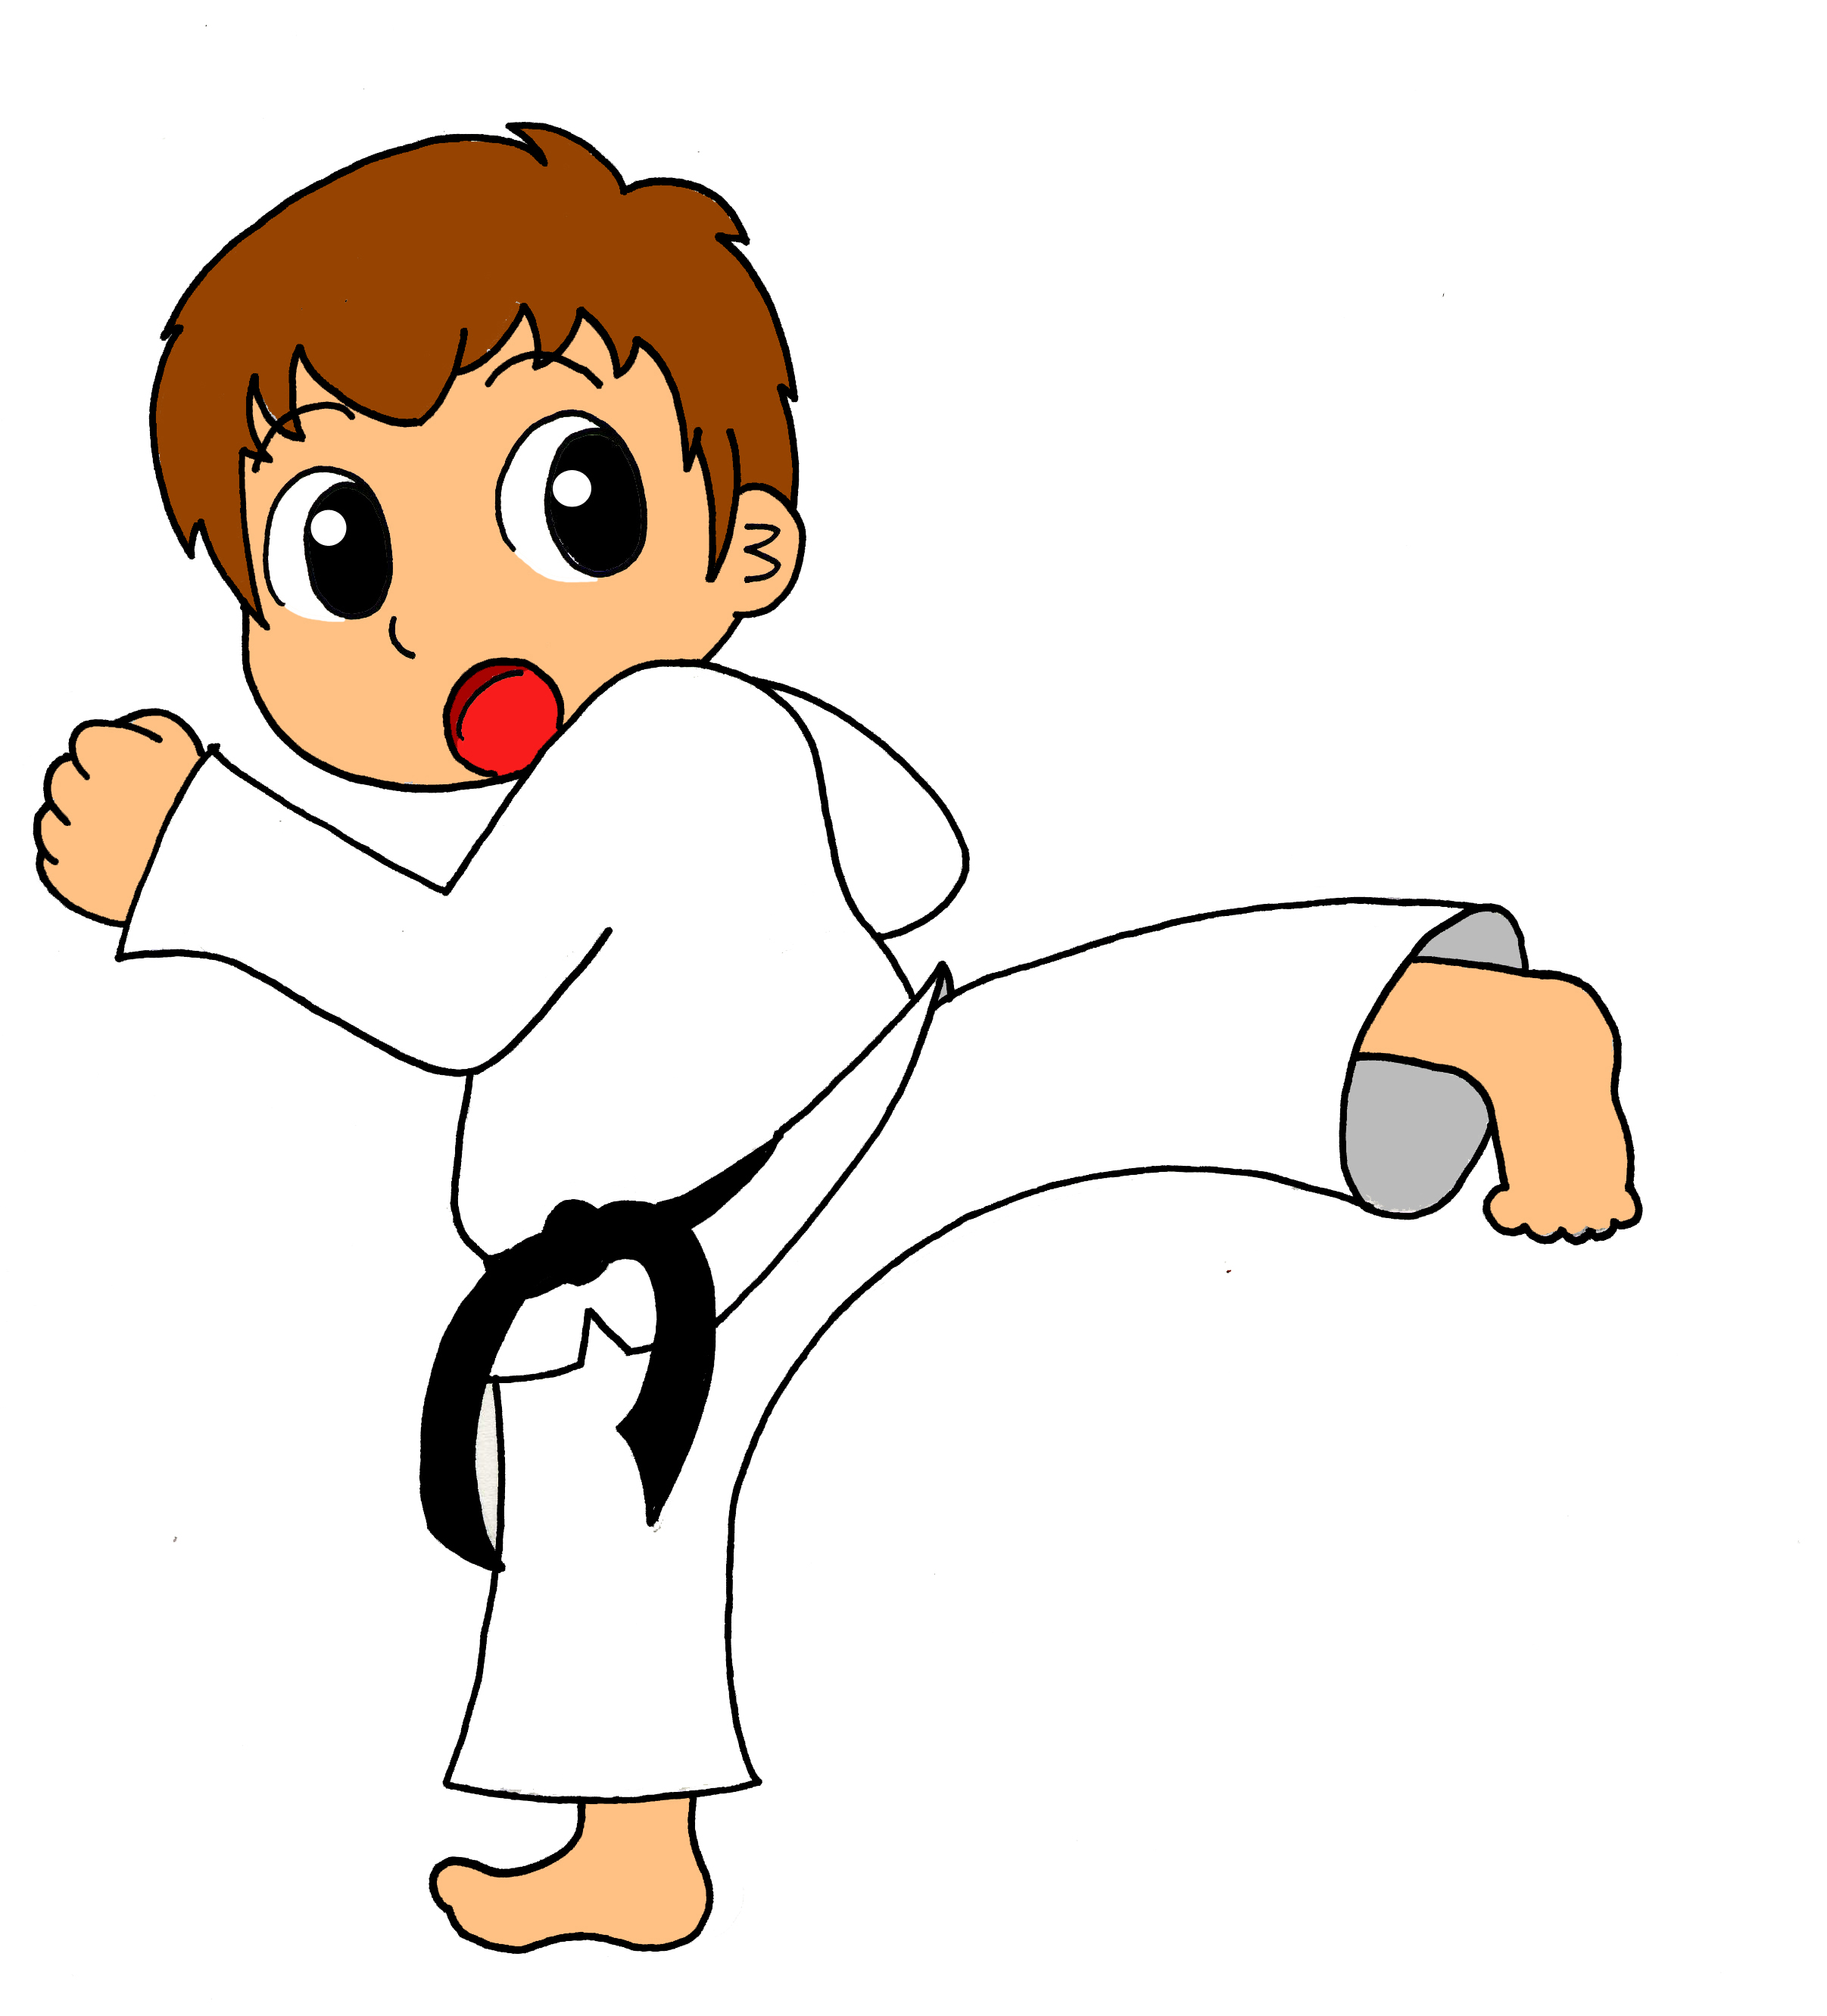 Louisiana Sport Taekwondo - Fun Stuff